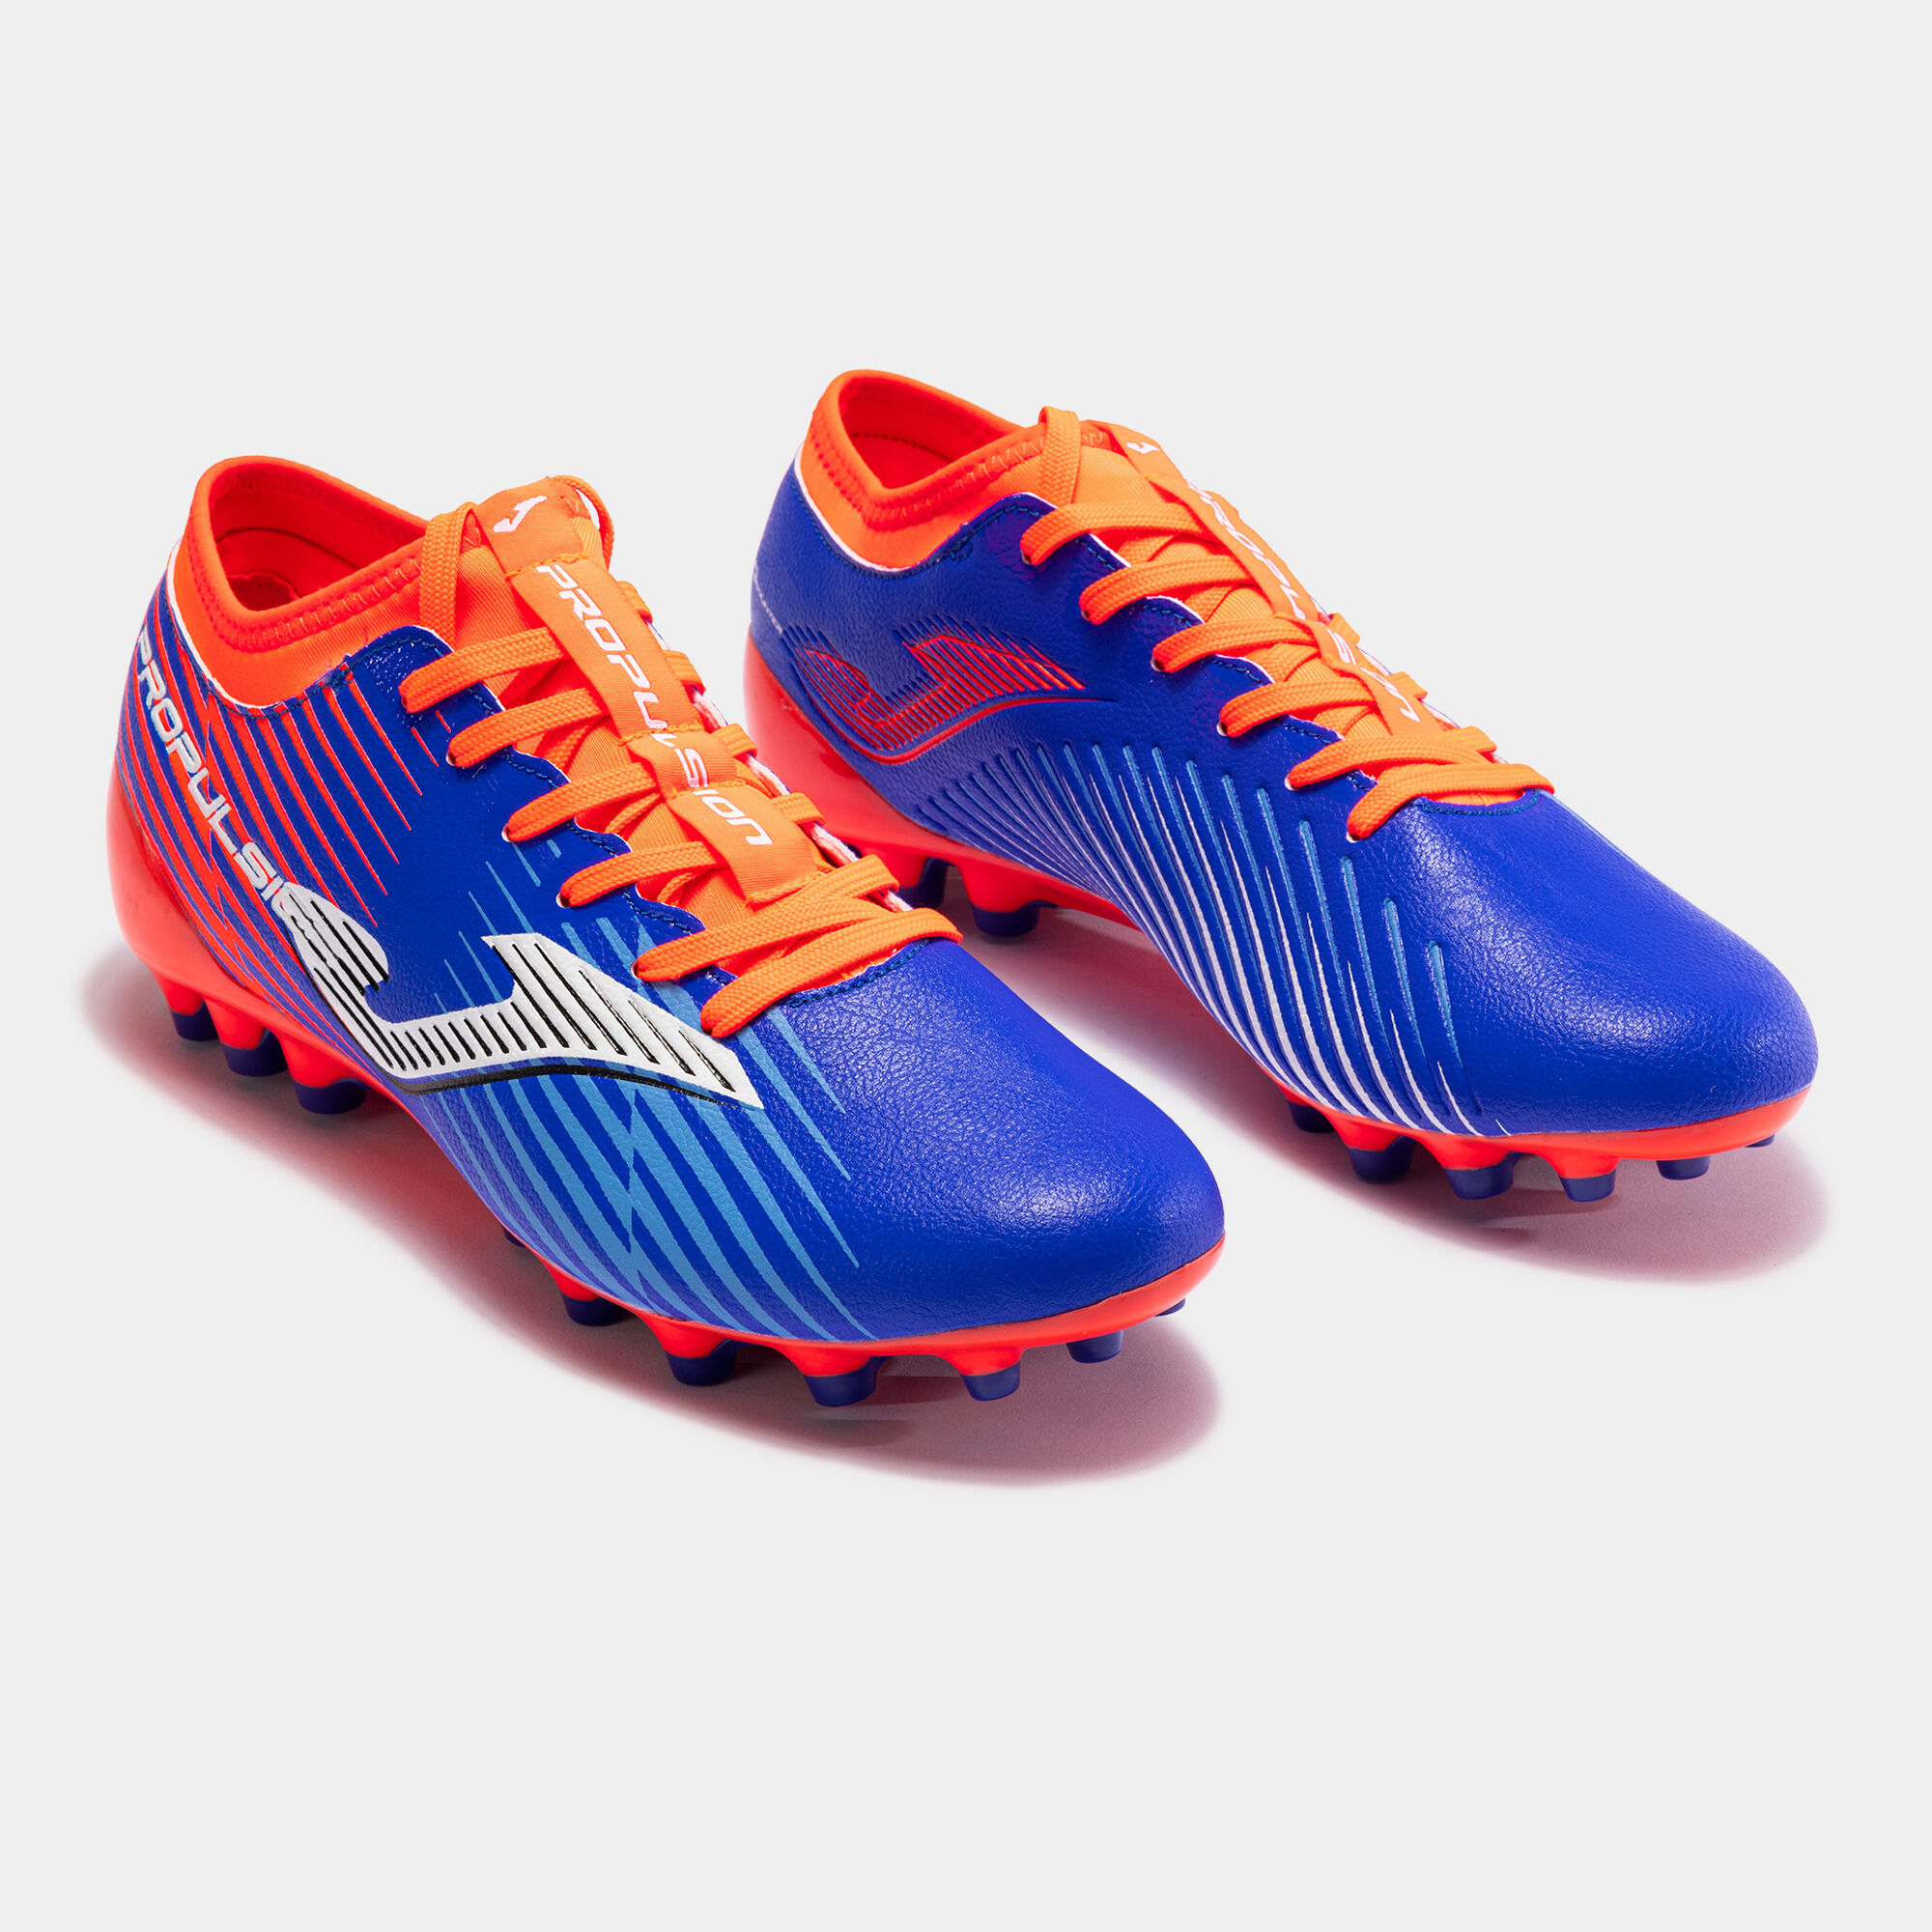 Football boots Propulsion Cup 23 artificial grass royal blue fluorescent orange